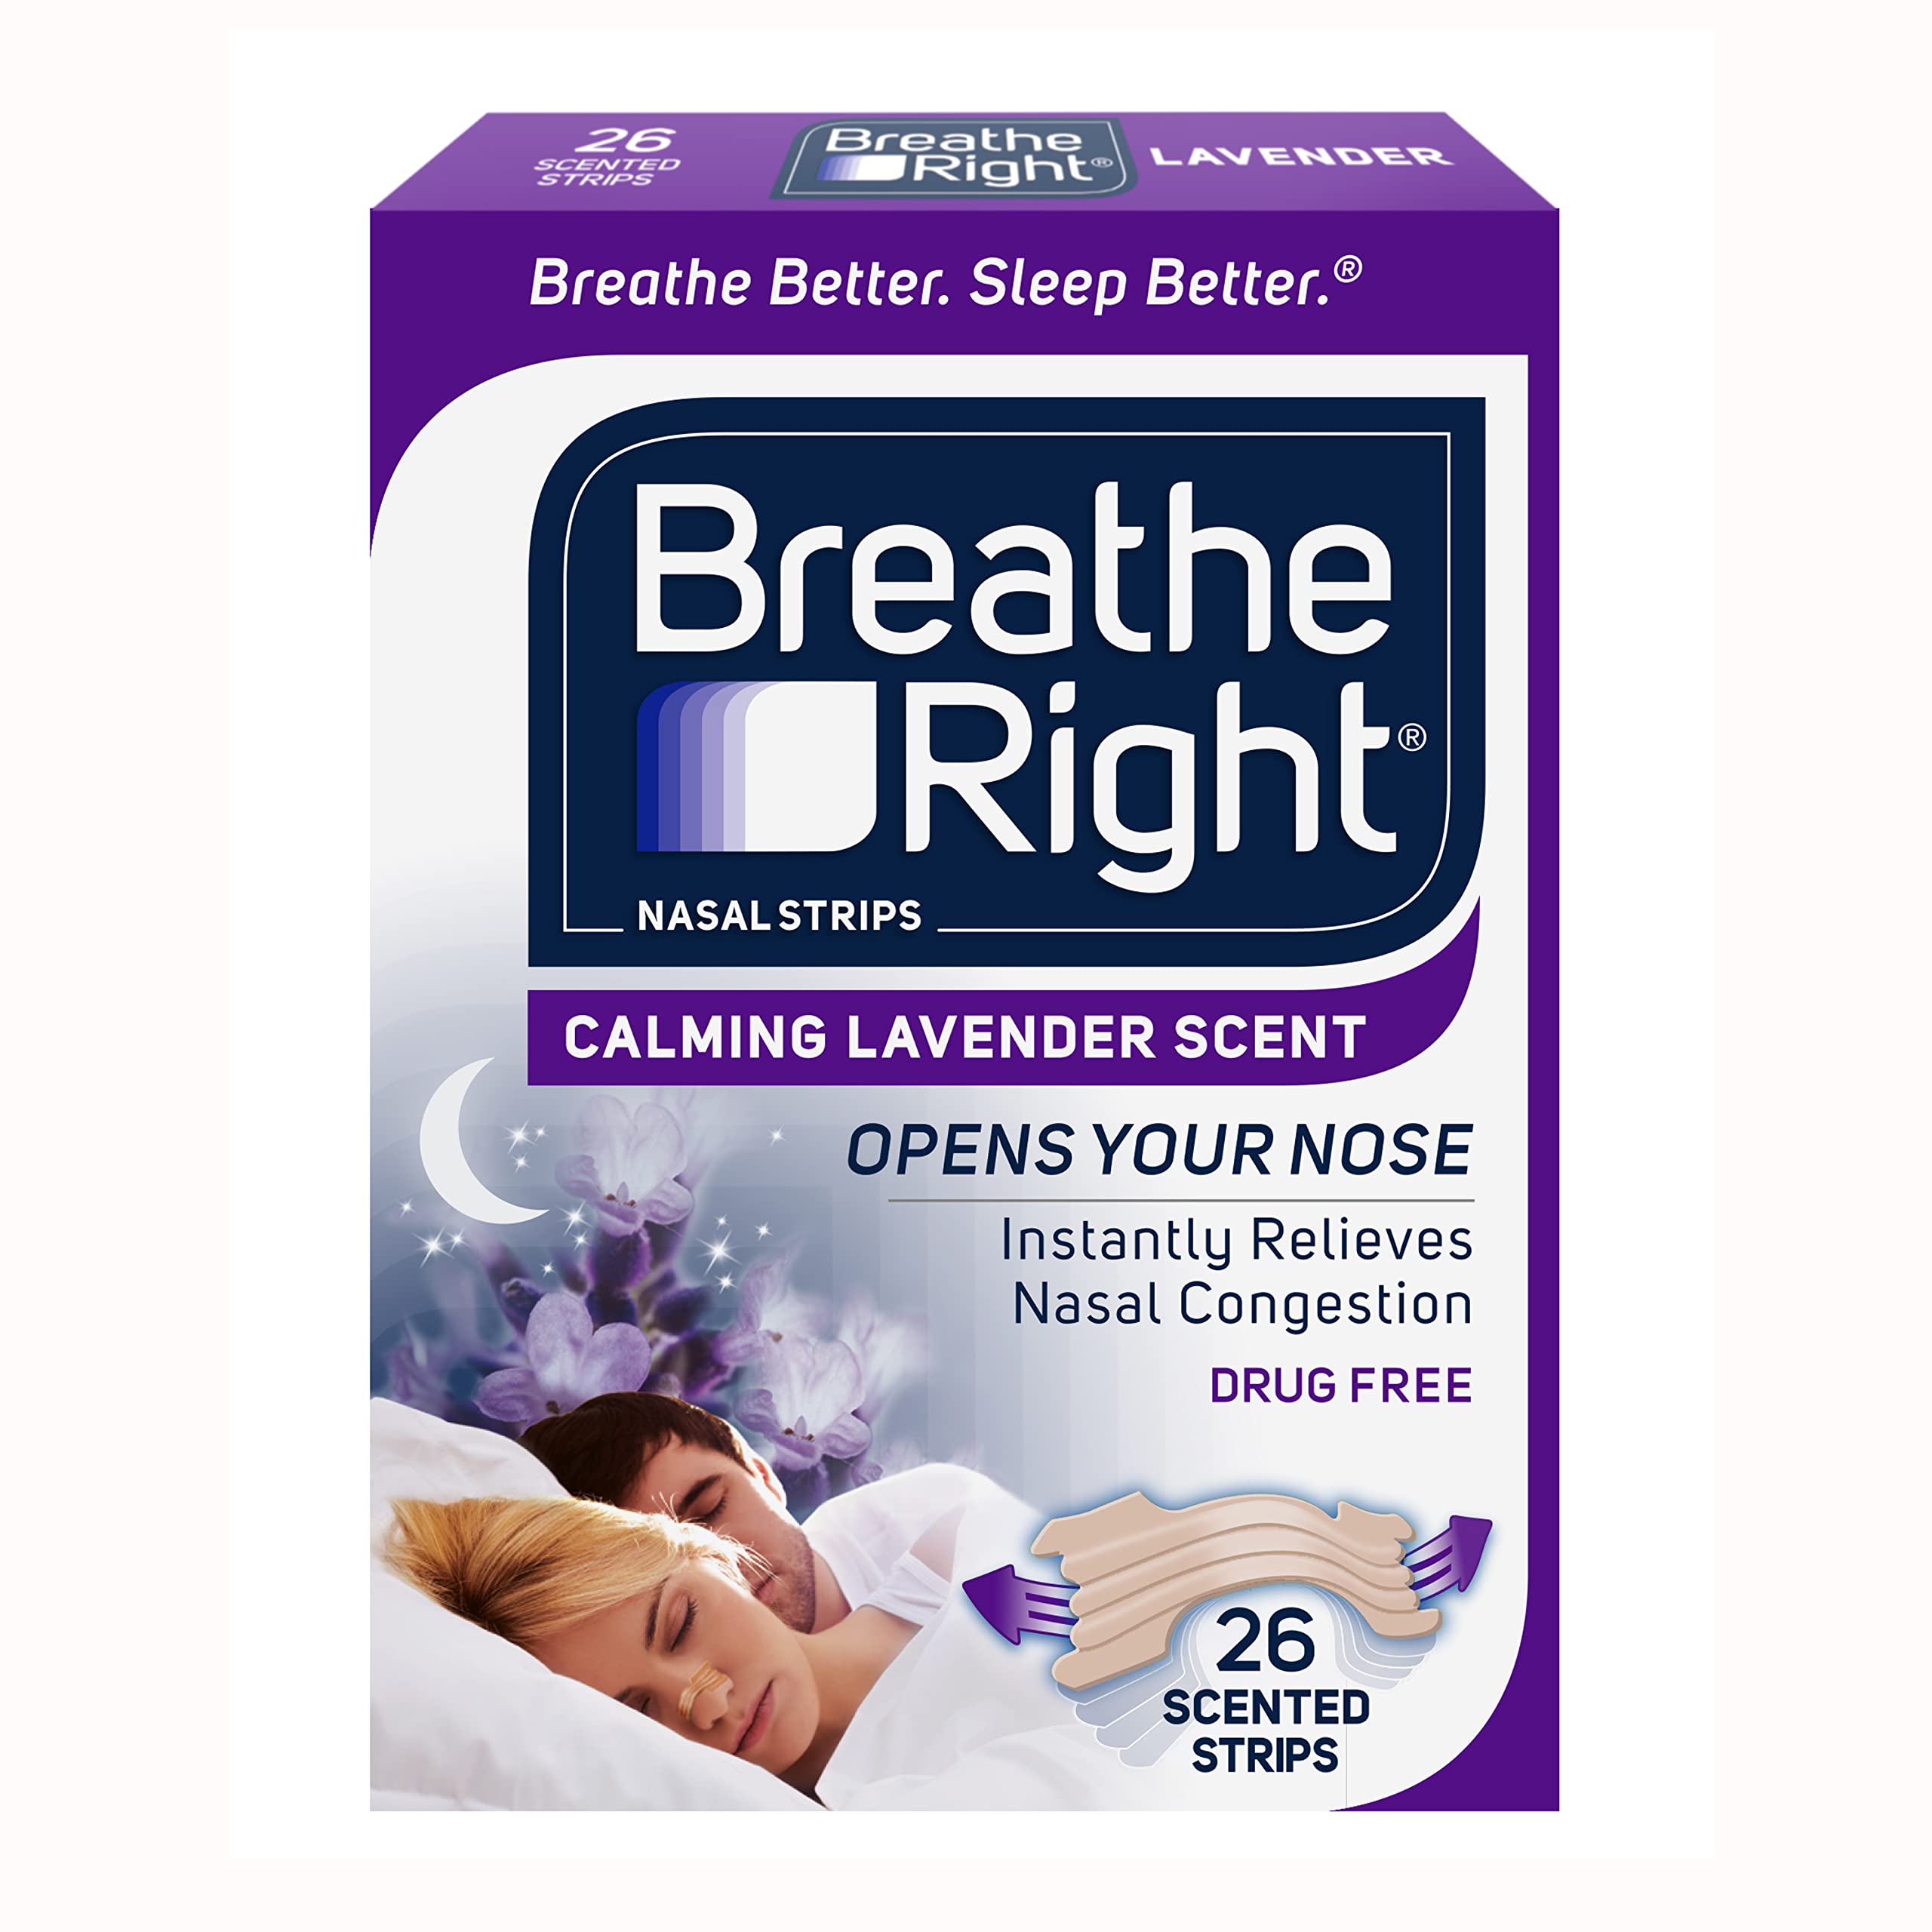 Breathe Right Original Nasal Strips, Tan Nasal Strips, Sm/Med, Help Stop  Snoring